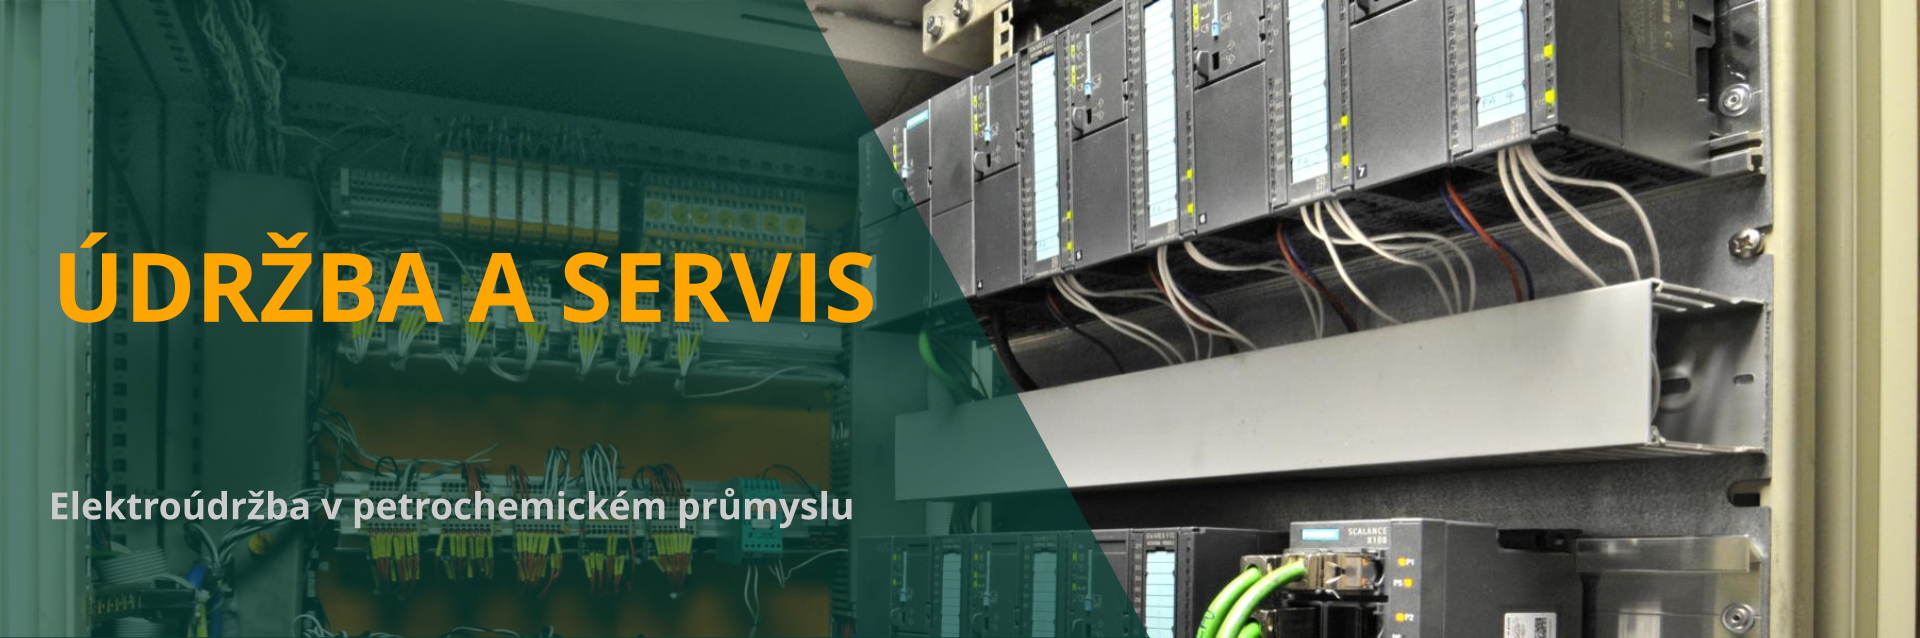 INELSEV - Údržba a servis elektro v techniologiích